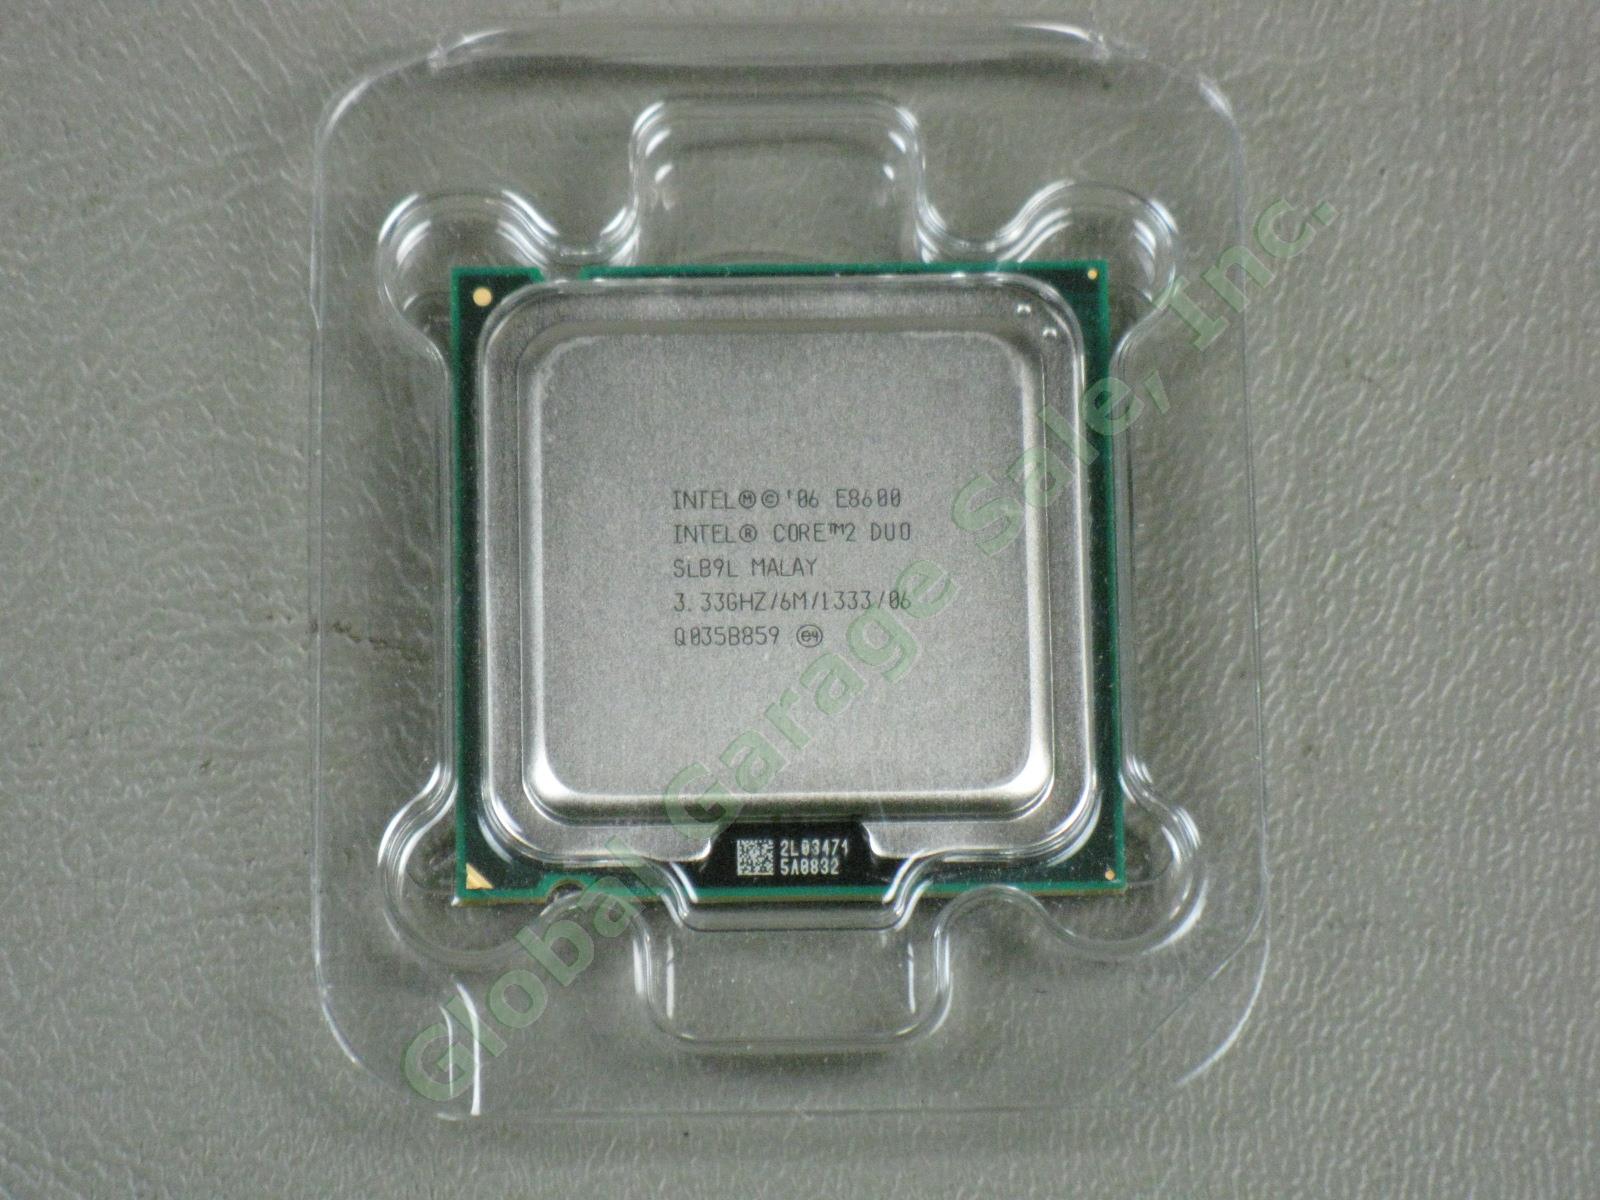 NEW Intel Core 2 Duo E8600 3.33GHz CPU Processor LGA775 Socket T + Heatsink Fan 1